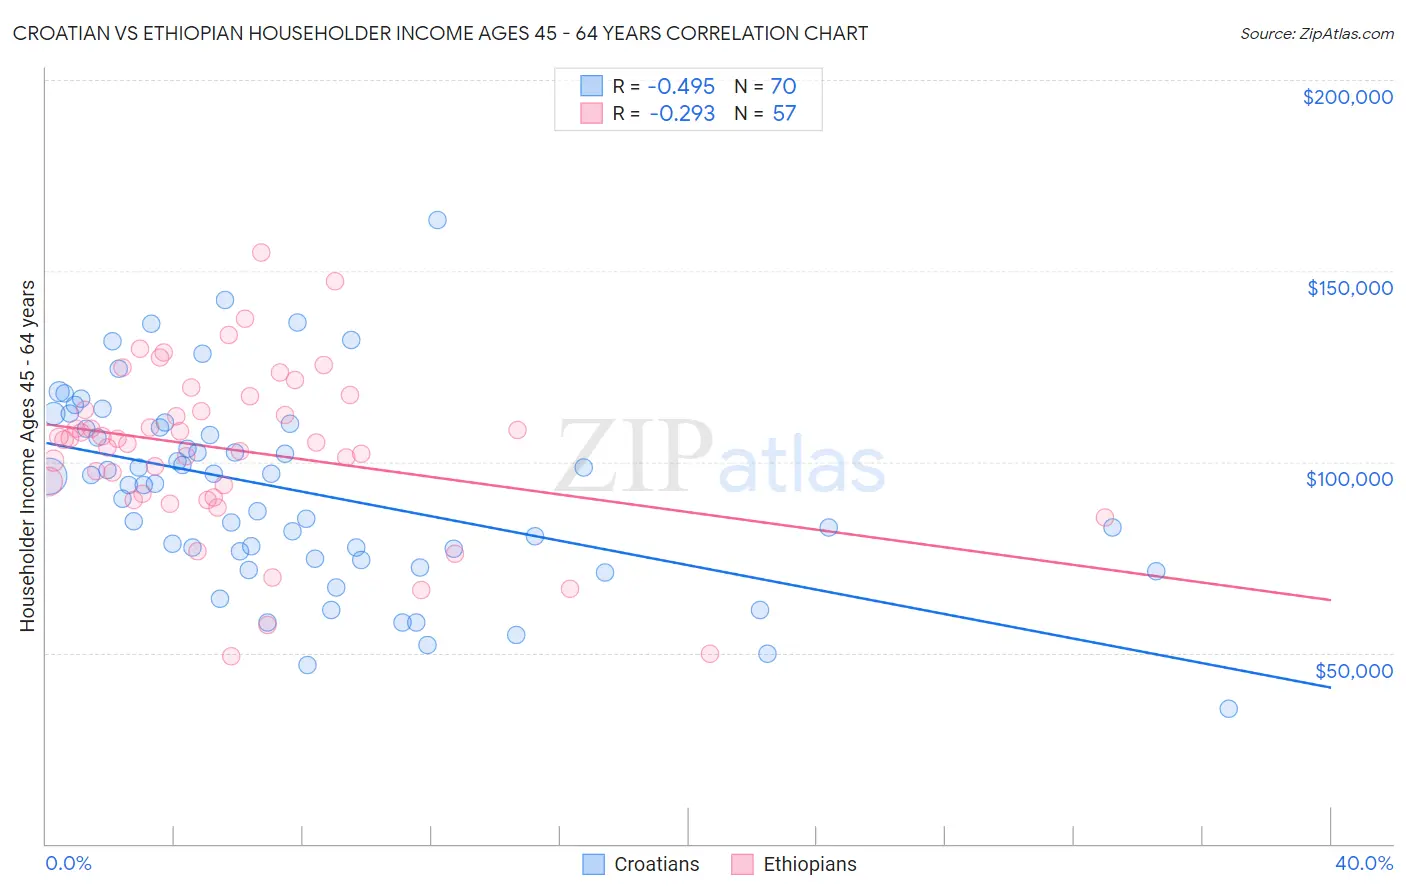 Croatian vs Ethiopian Householder Income Ages 45 - 64 years